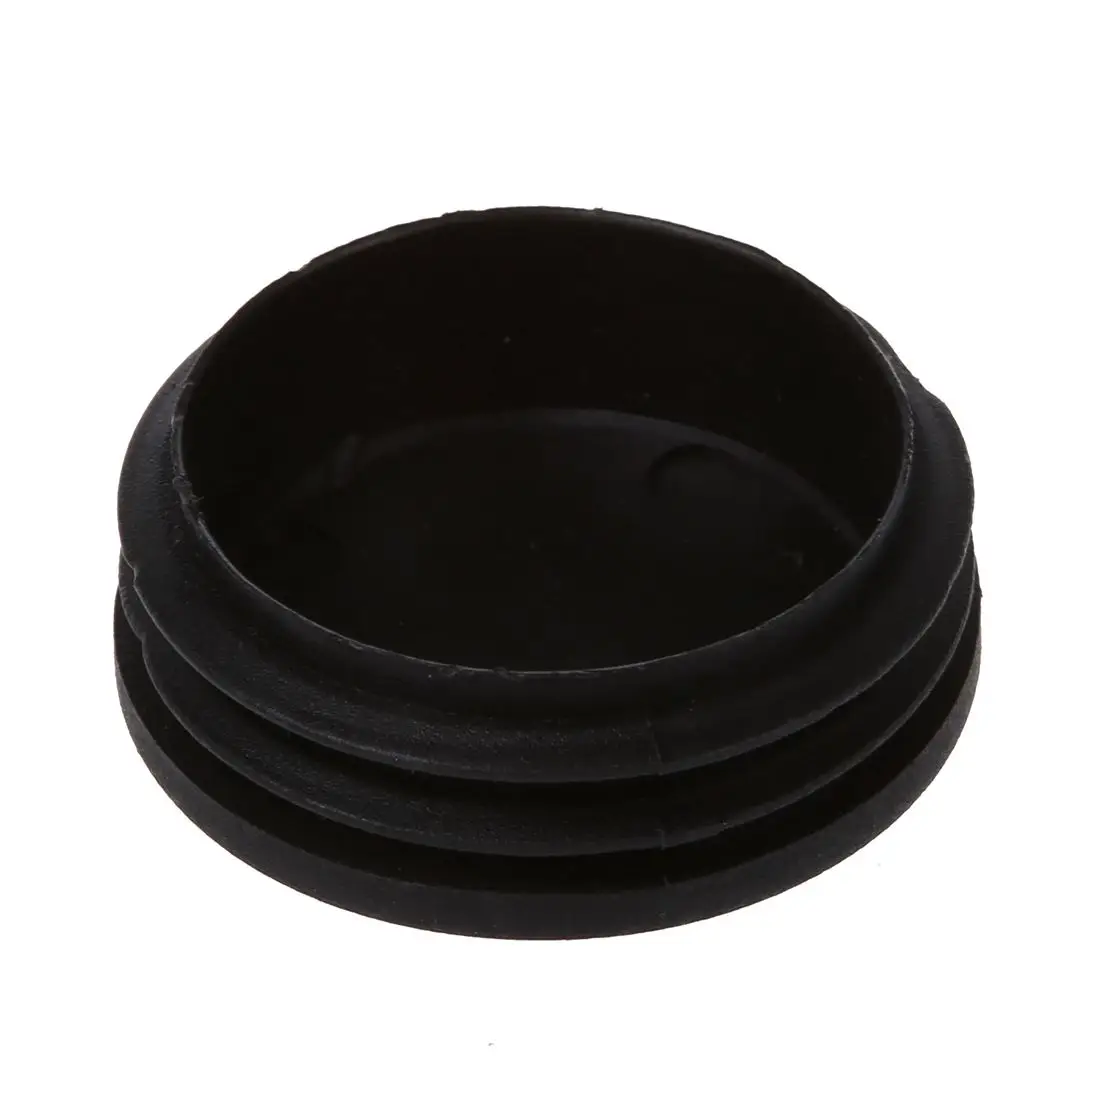 6 x черный пластик 50 мм с диматром трубки втулка шапки Чехлы для мангала